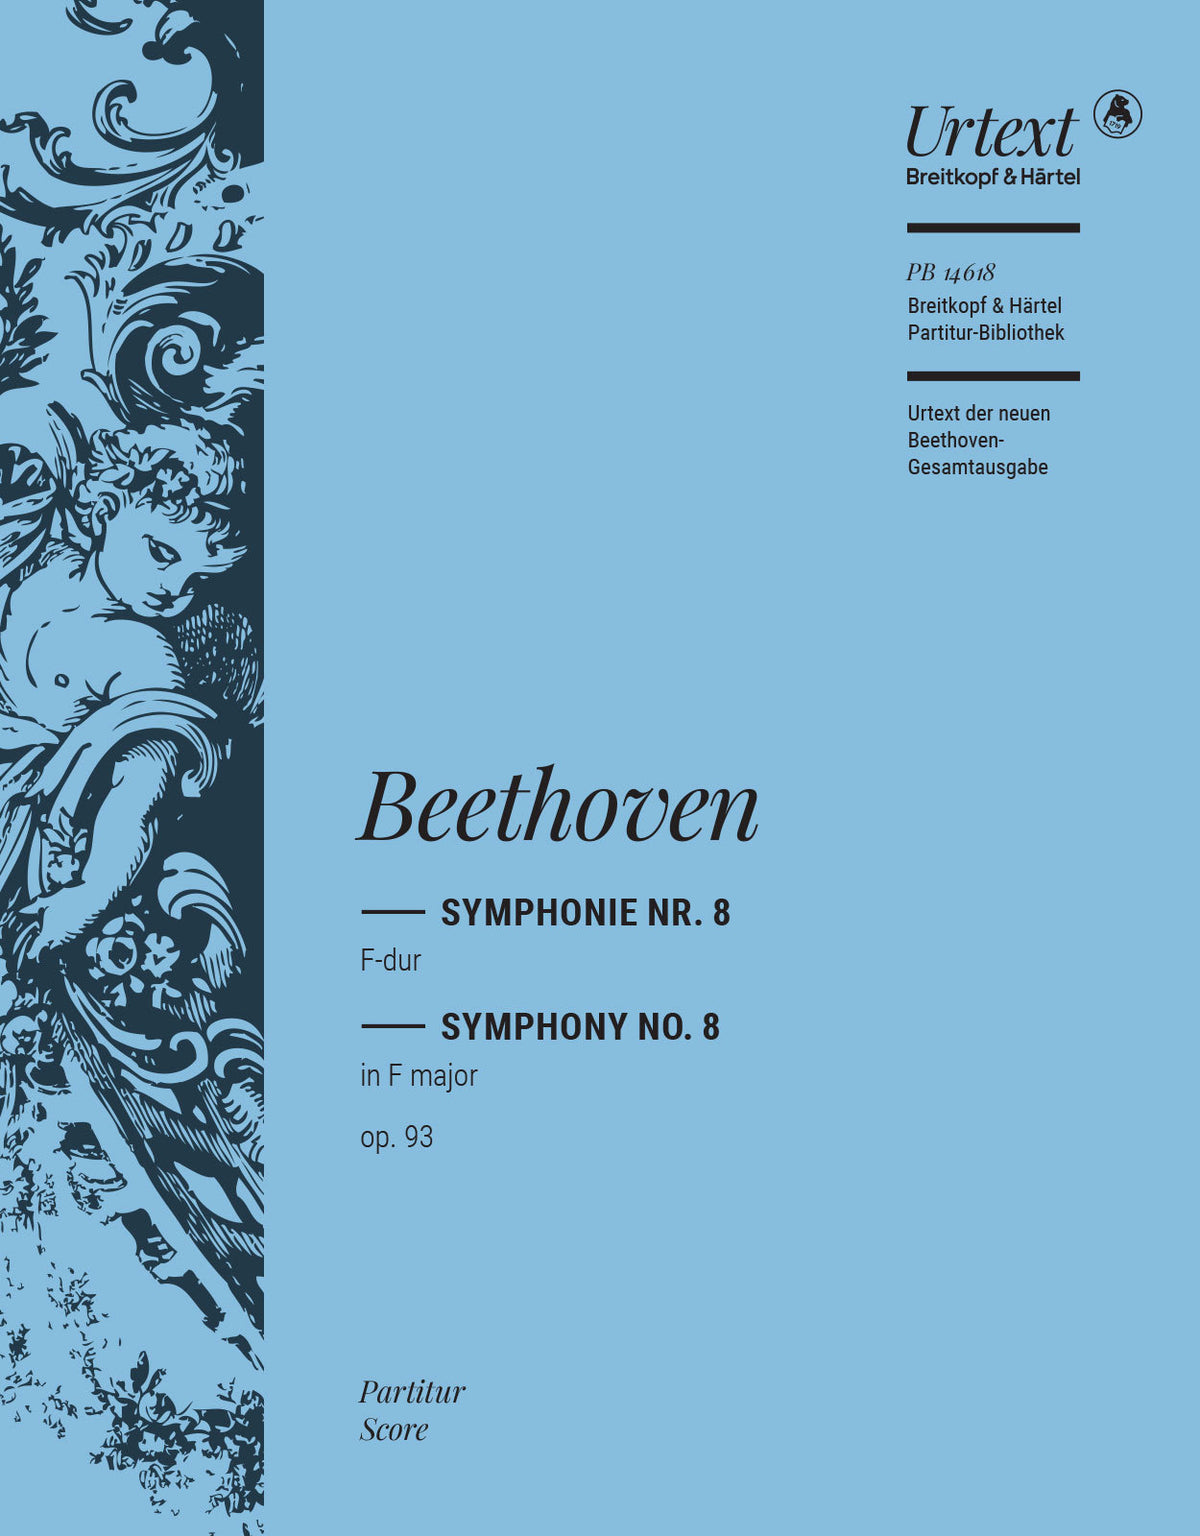 Beethoven Symphony No. 8 in F major Op. 93